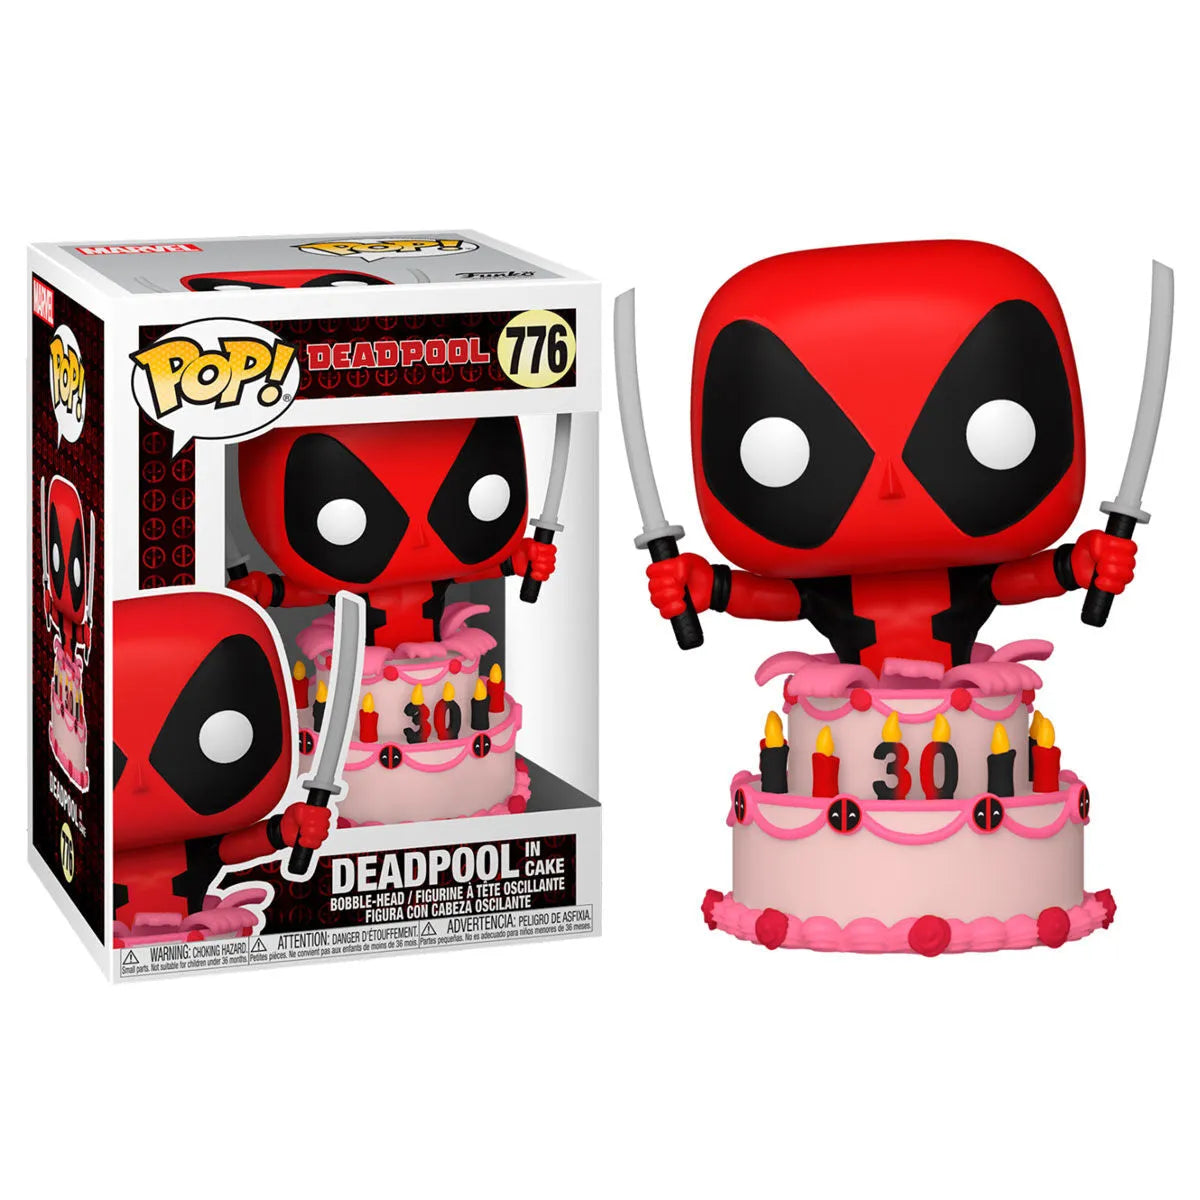 Funko Pop! Marvel Deadpool 30th Anniversary - Deadpool in Cake Vinyl Figure #776